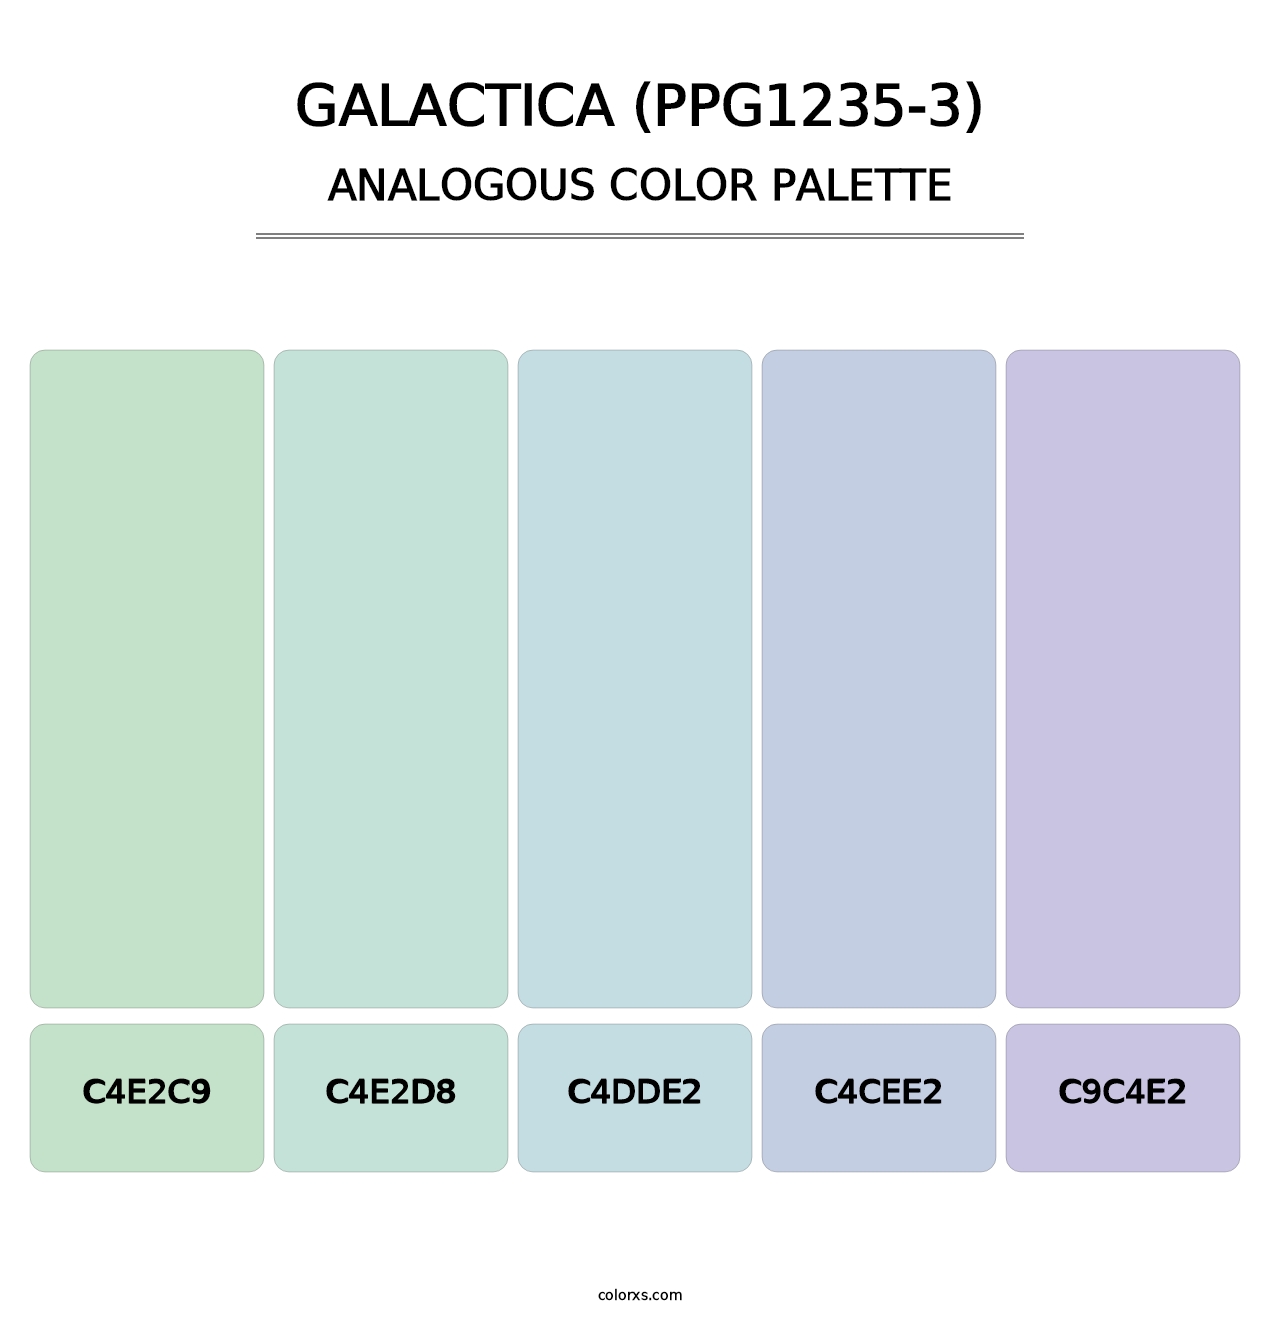 Galactica (PPG1235-3) - Analogous Color Palette